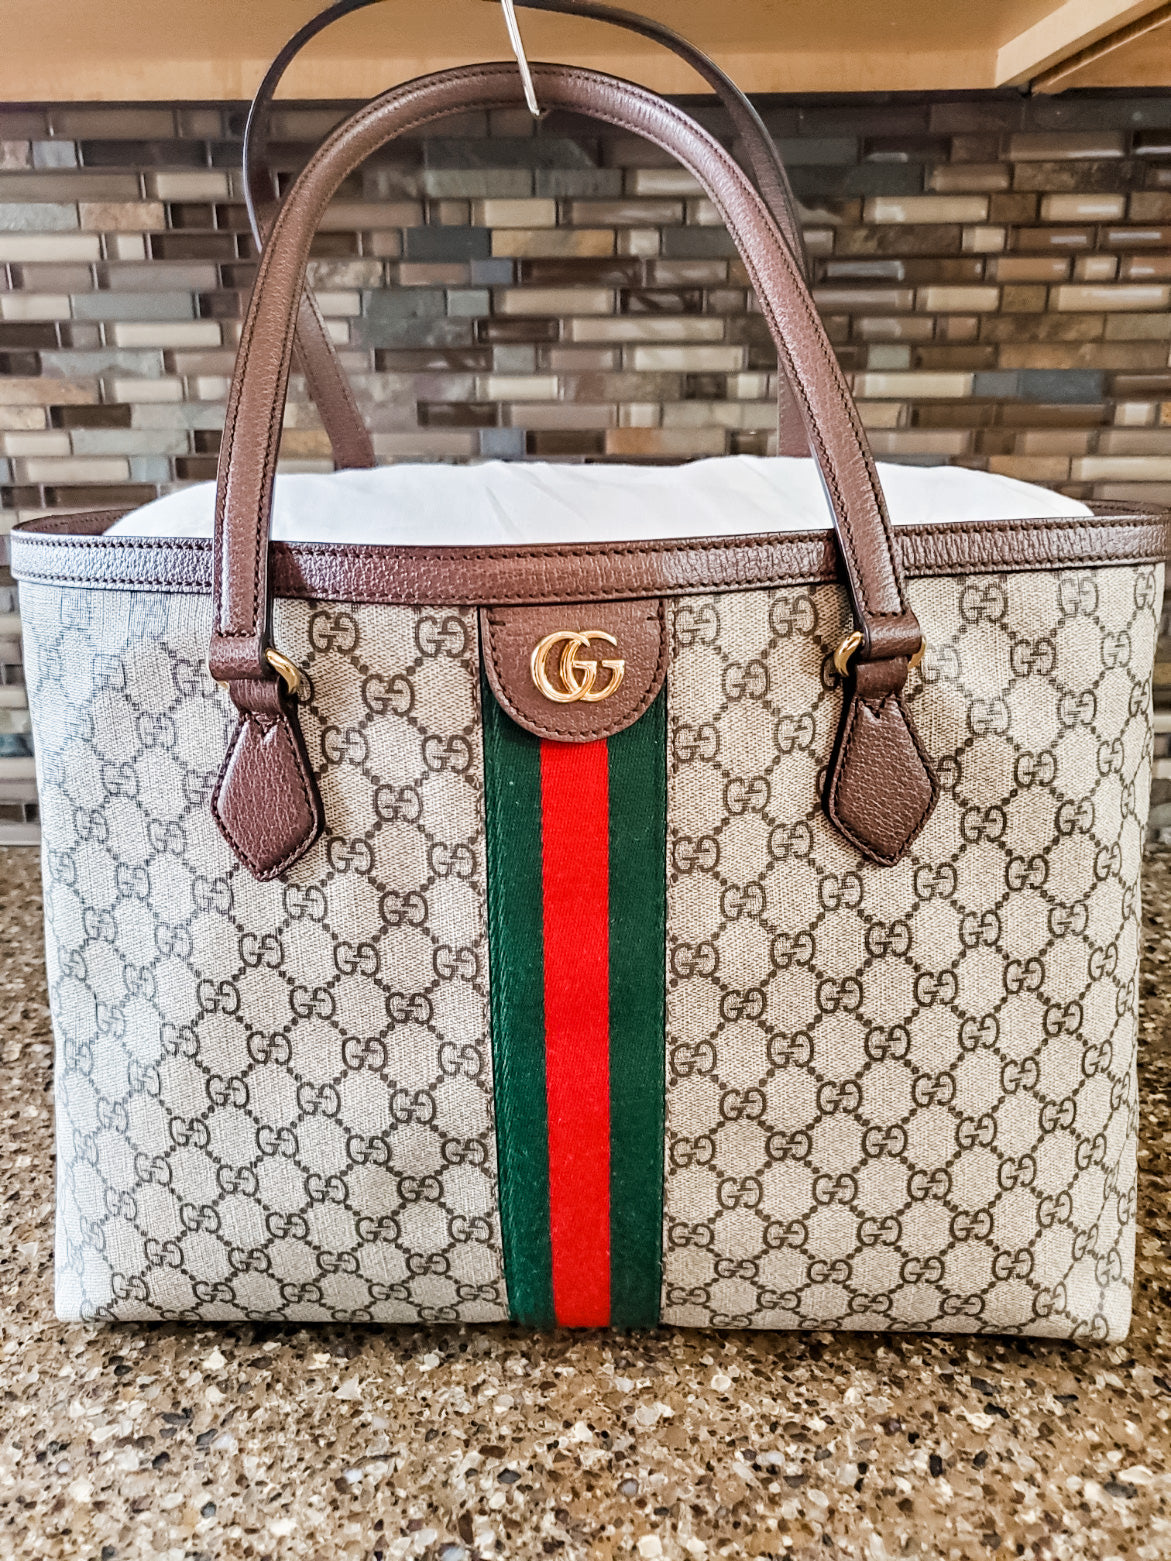 Gucci GC Toiletry Case Dodi insert – The Dodi Handbag Insert